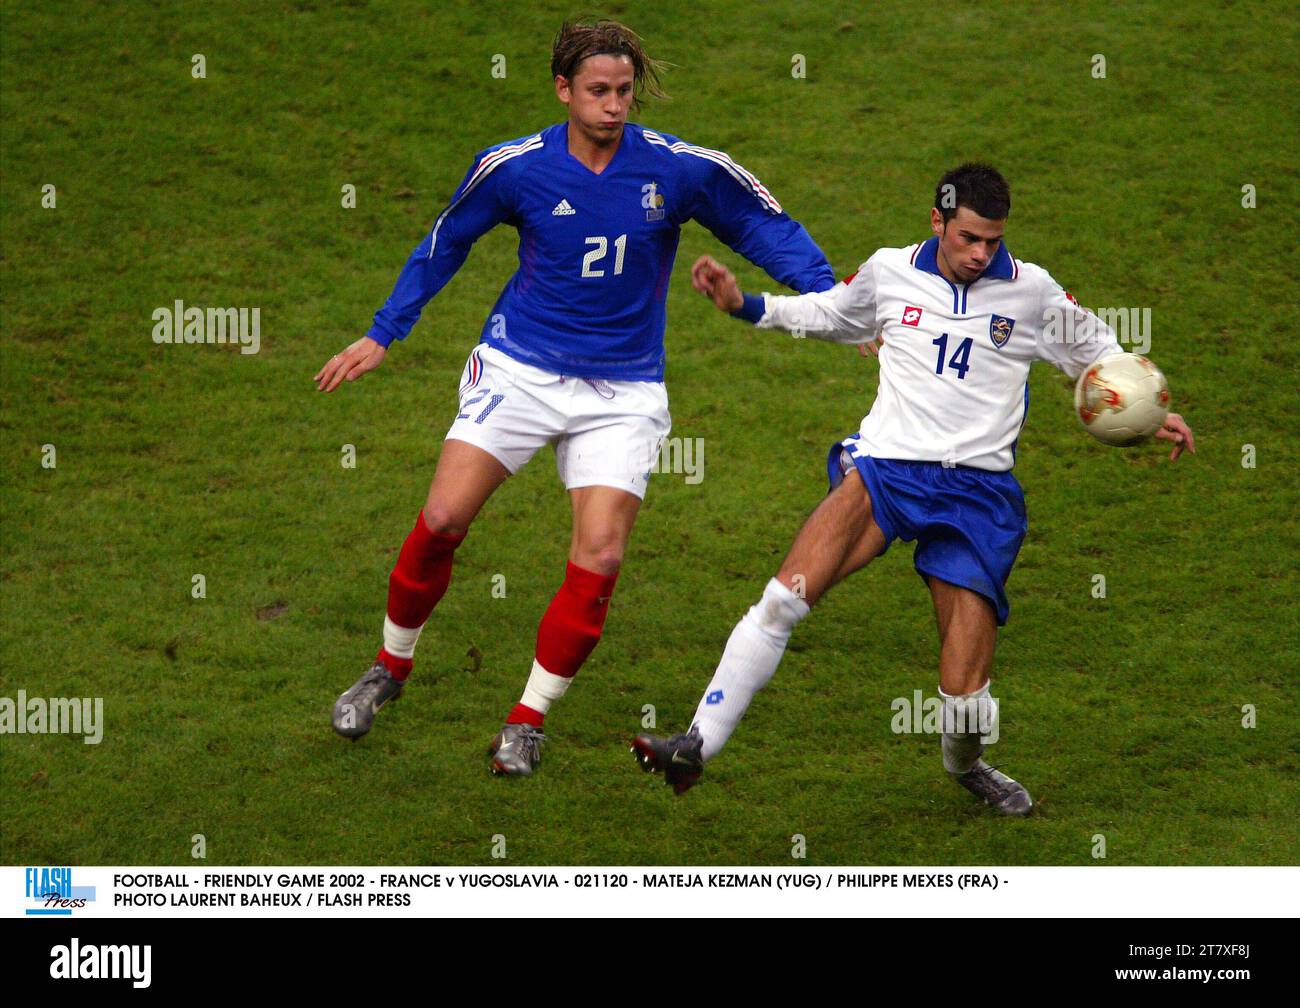 FOOTBALL - FRIENDLY GAME 2002 - FRANCE v YUGOSLAVIA - 021120 - MATEJA KEZMAN (YUG) / PHILIPPE MEXES (FRA) - PHOTO LAURENT BAHEUX / FLASH PRESS Stock Photo